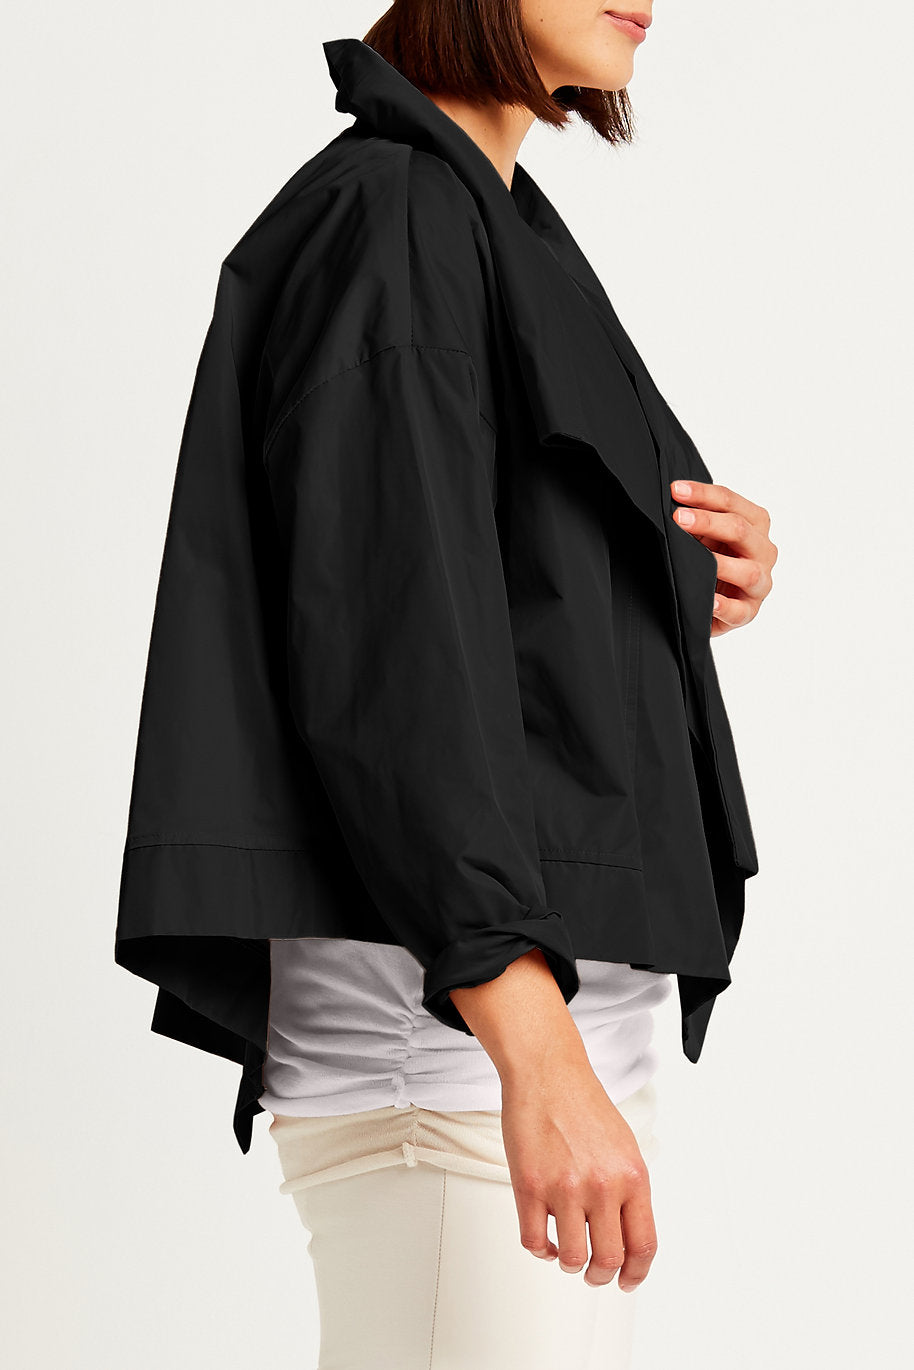 PLANET&nbsp;by Lauren G's Cropped Asymmetrical Jacket